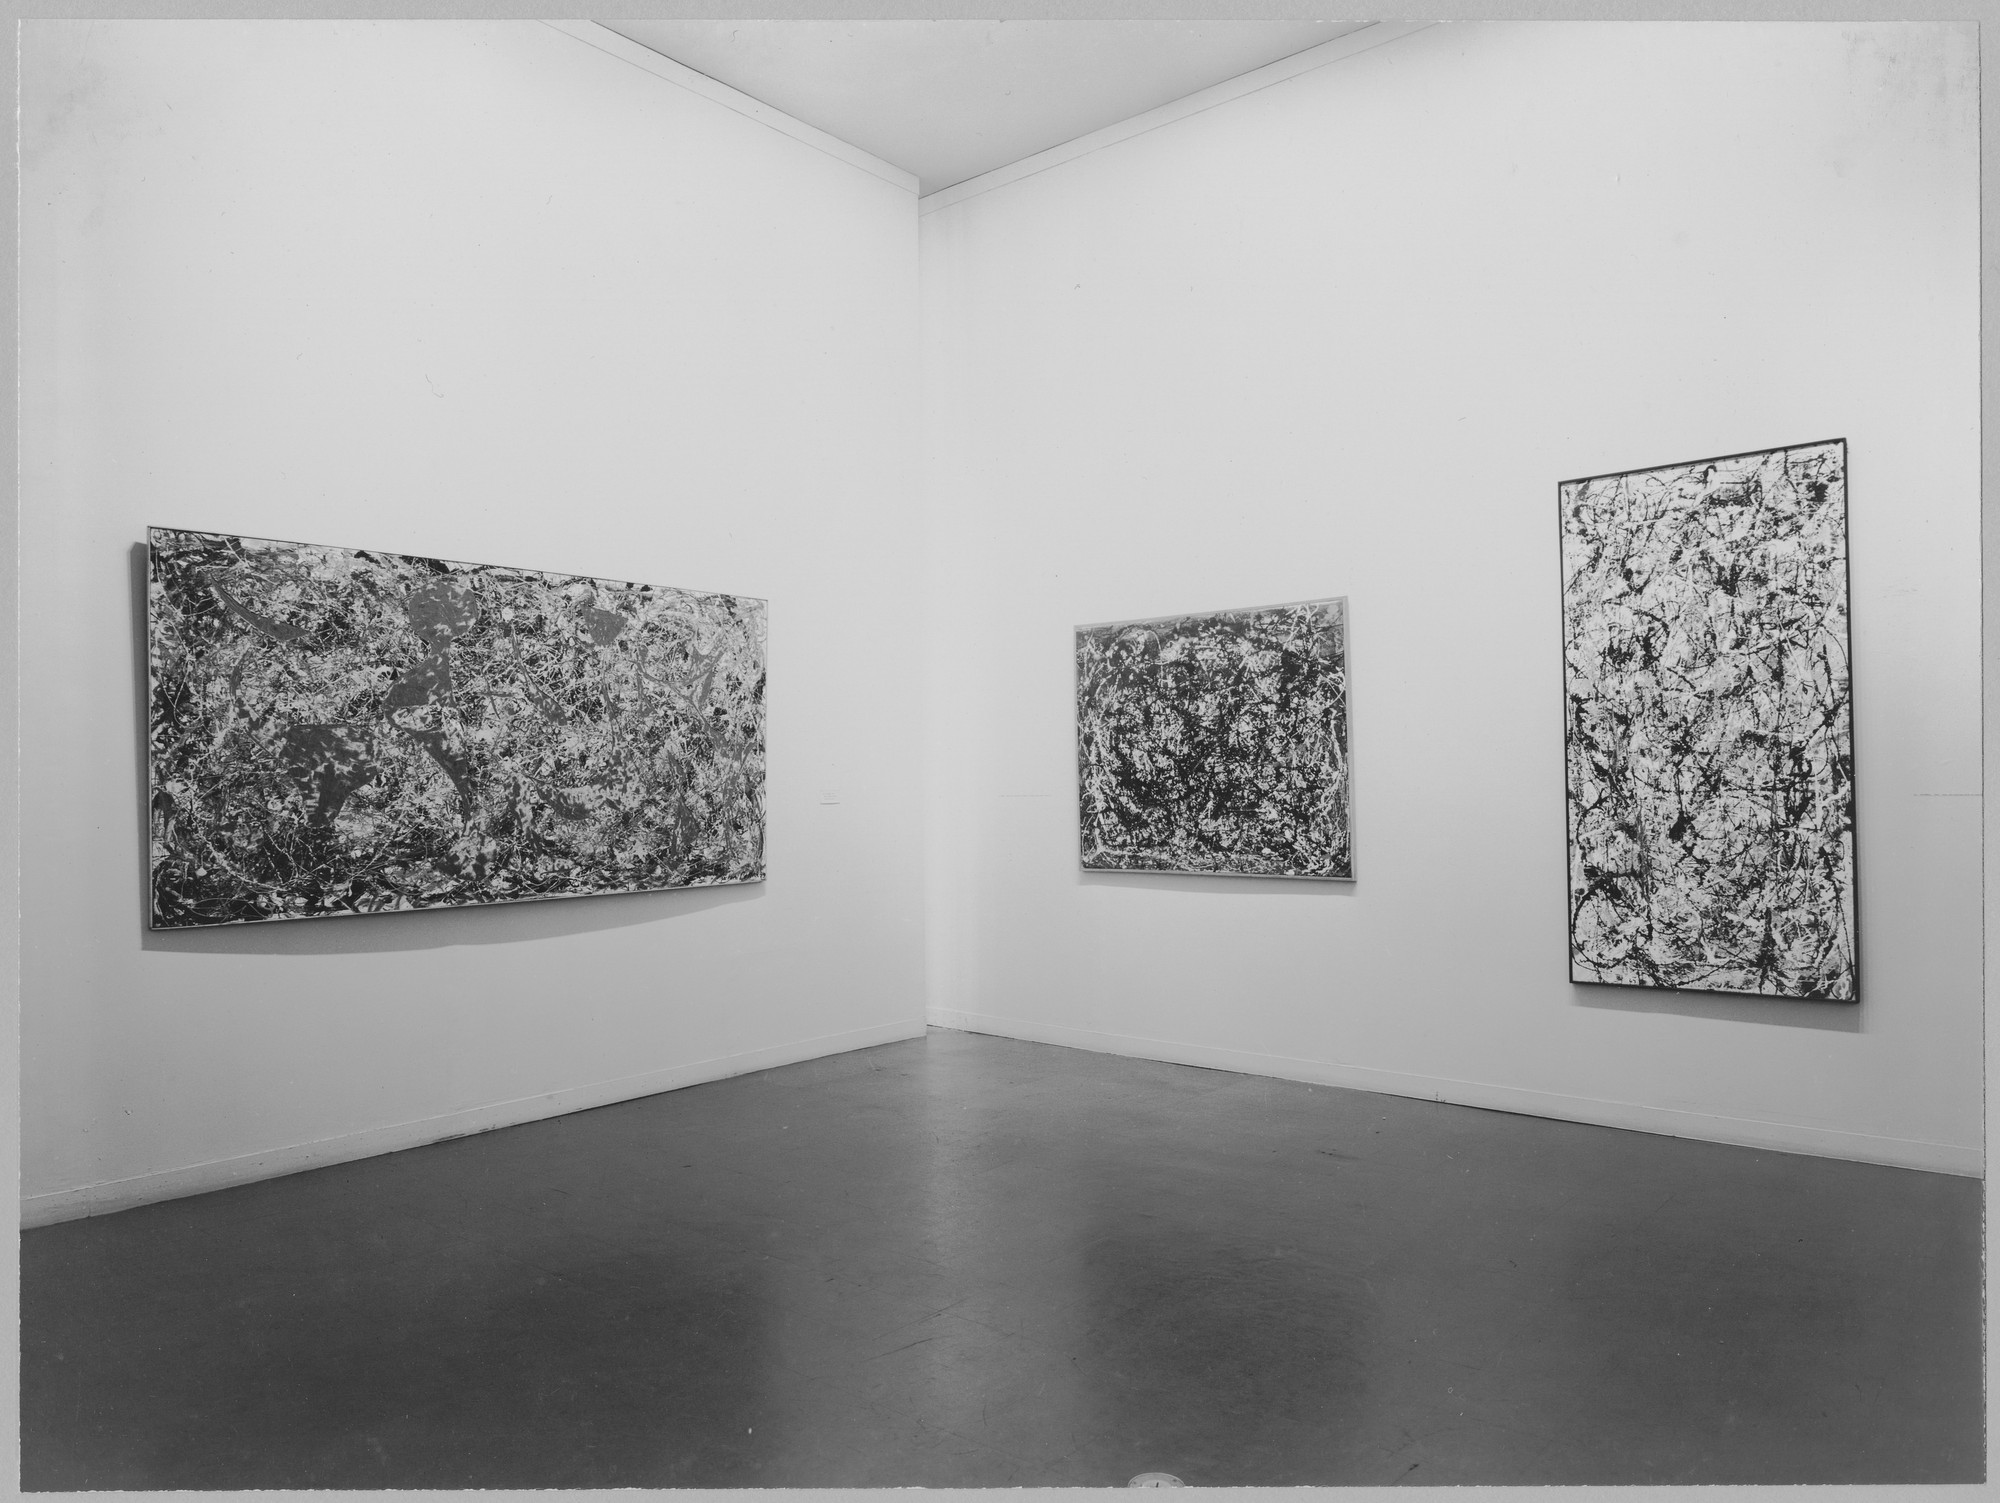 Installation view of the exhibition "Jackson Pollock." MoMA